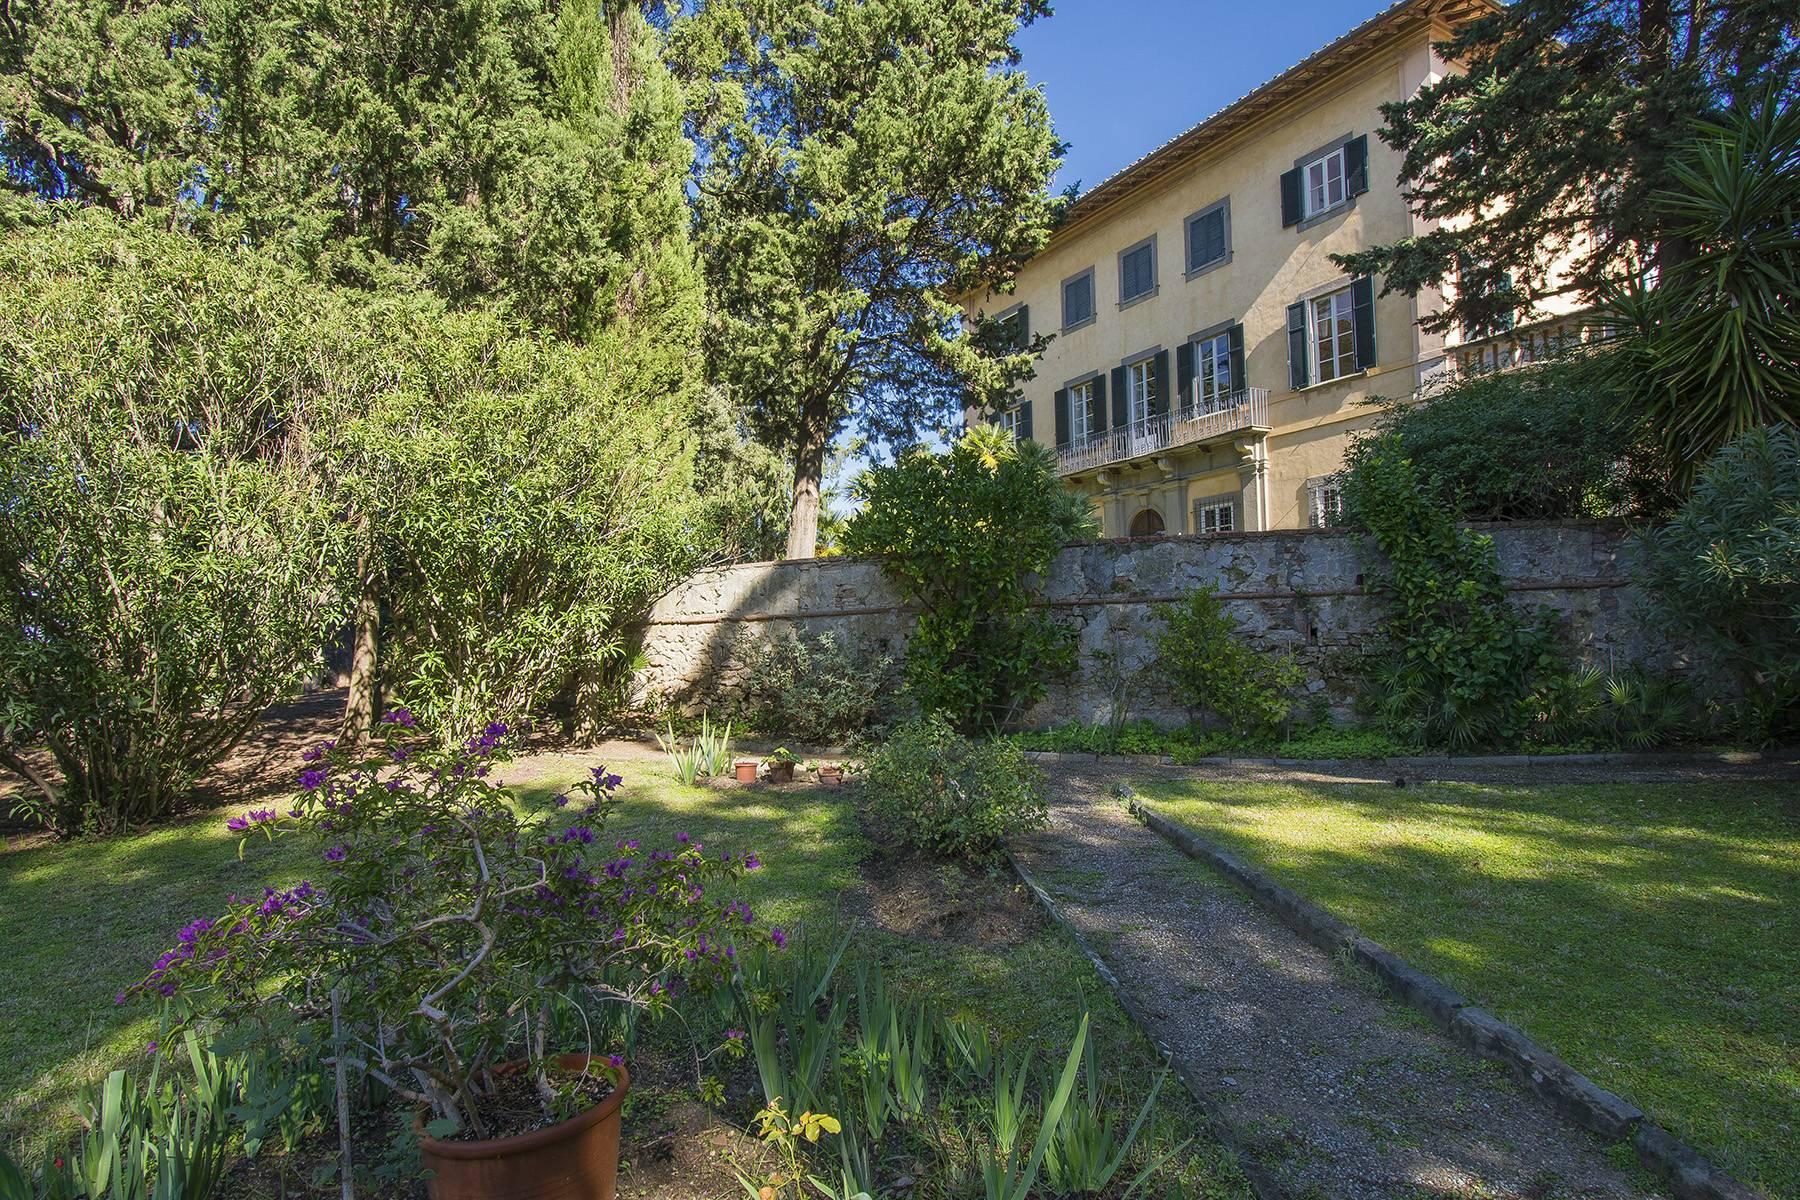 Charming Medicean Villa on the Tuscan hills - 32